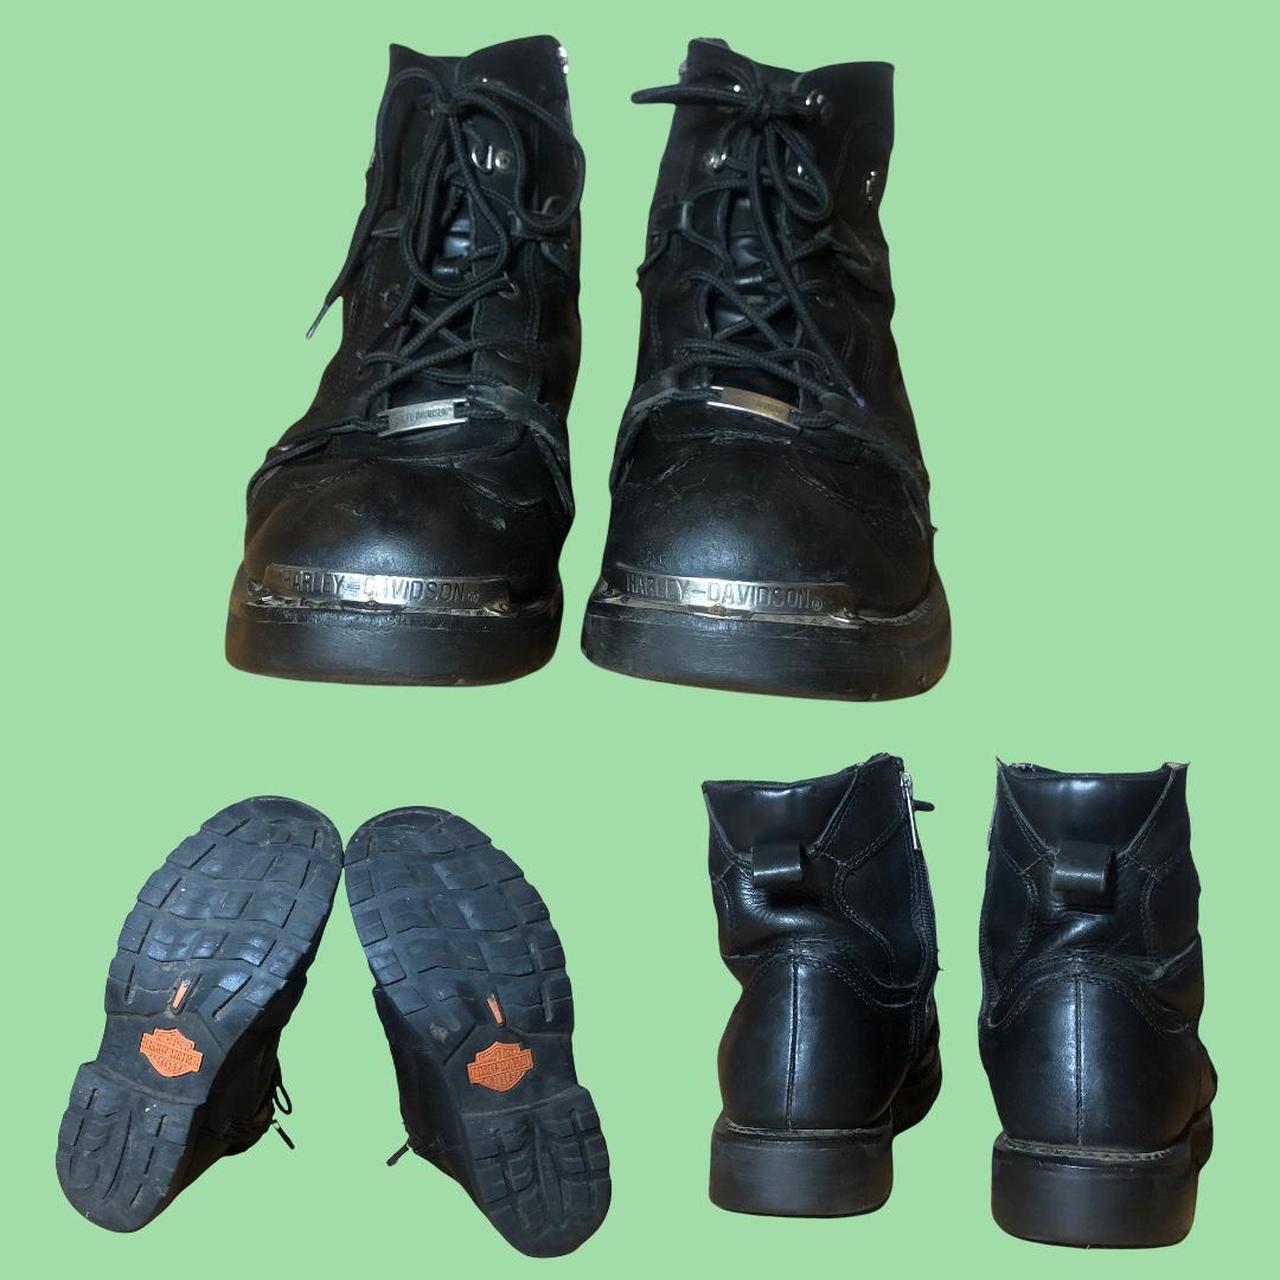 Harley Davidson Men's Black and Silver Boots (3)